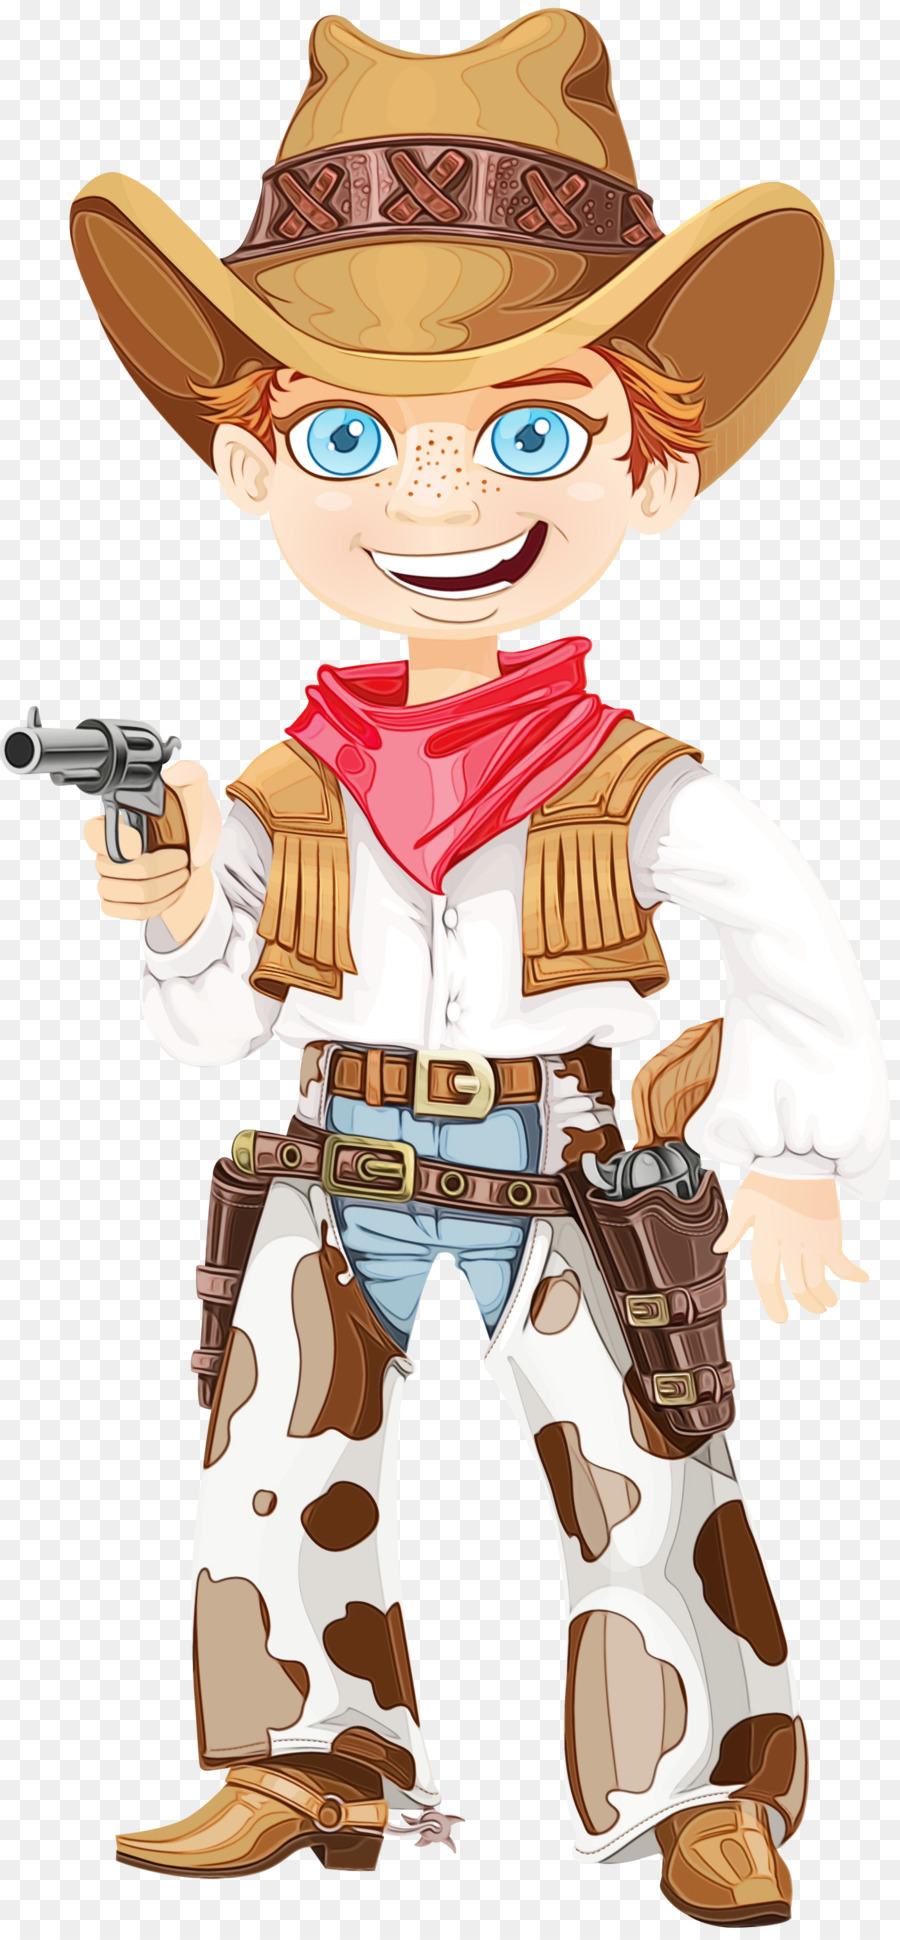 cartoon action figure pistola stile cowboy - 